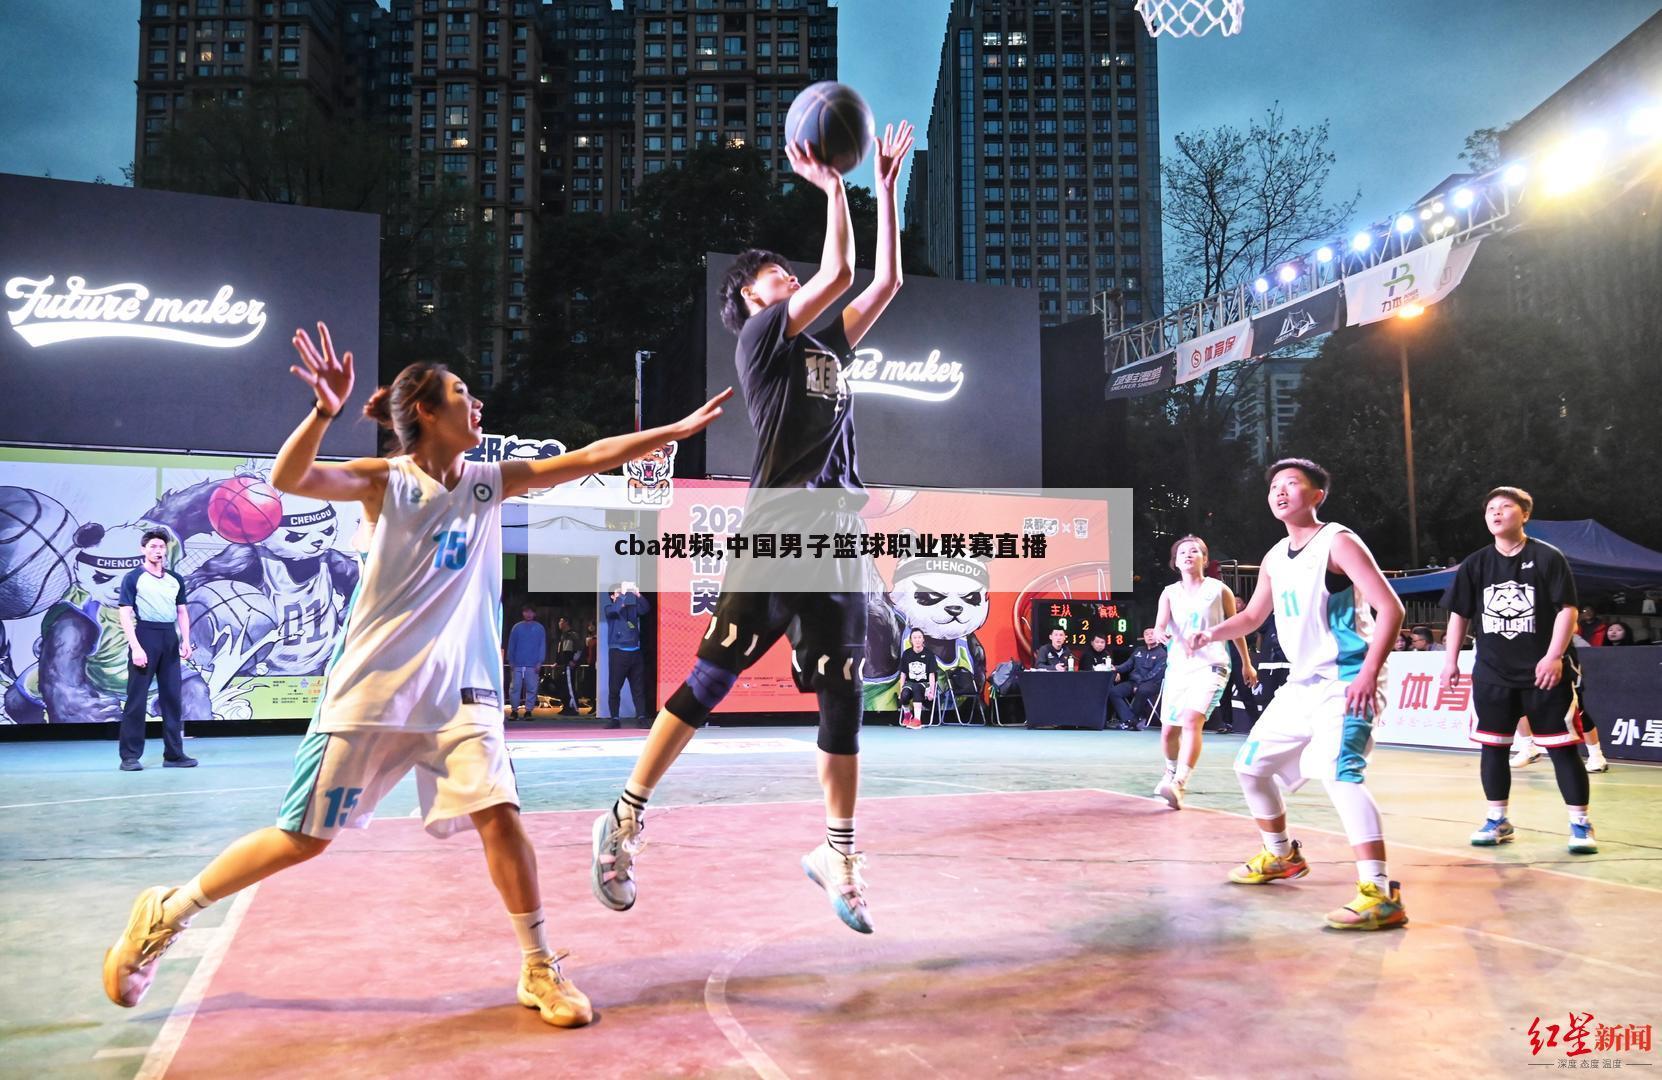 cba视频,中国男子篮球职业联赛直播